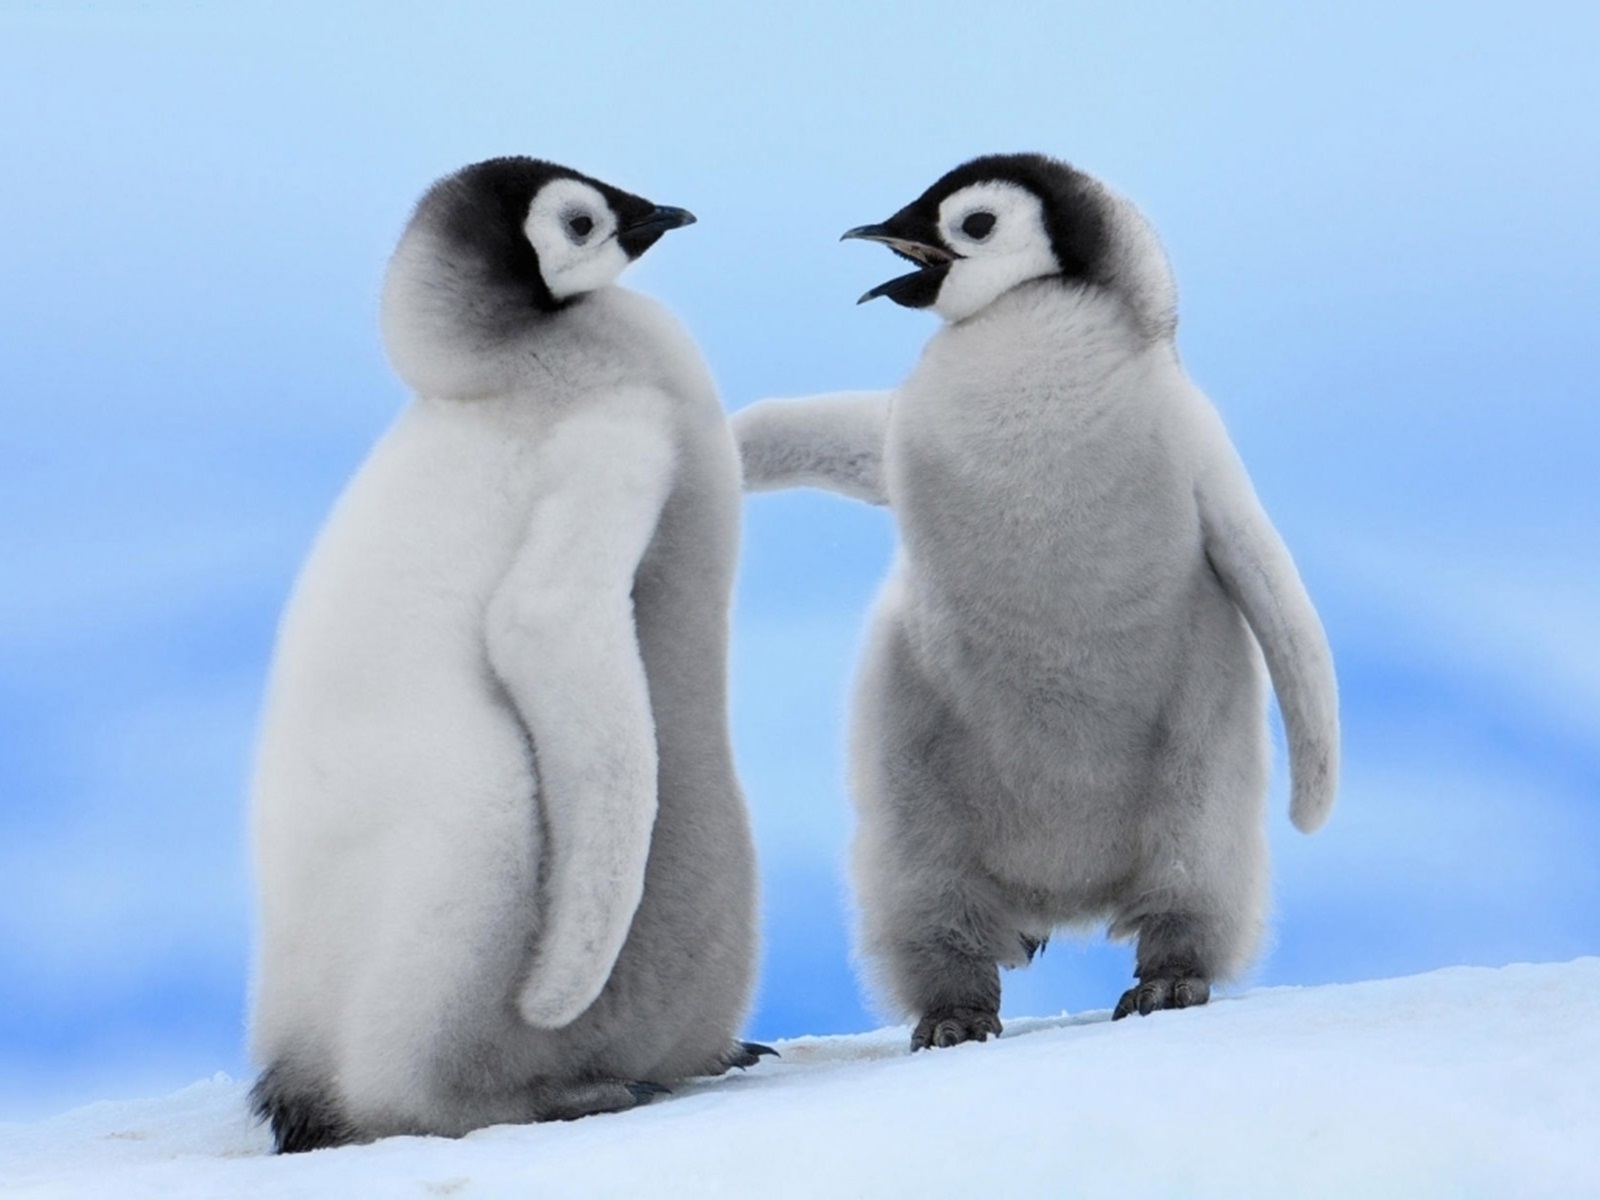 Cute Penguins Couple Photos HD Wallpaper Image Pictures